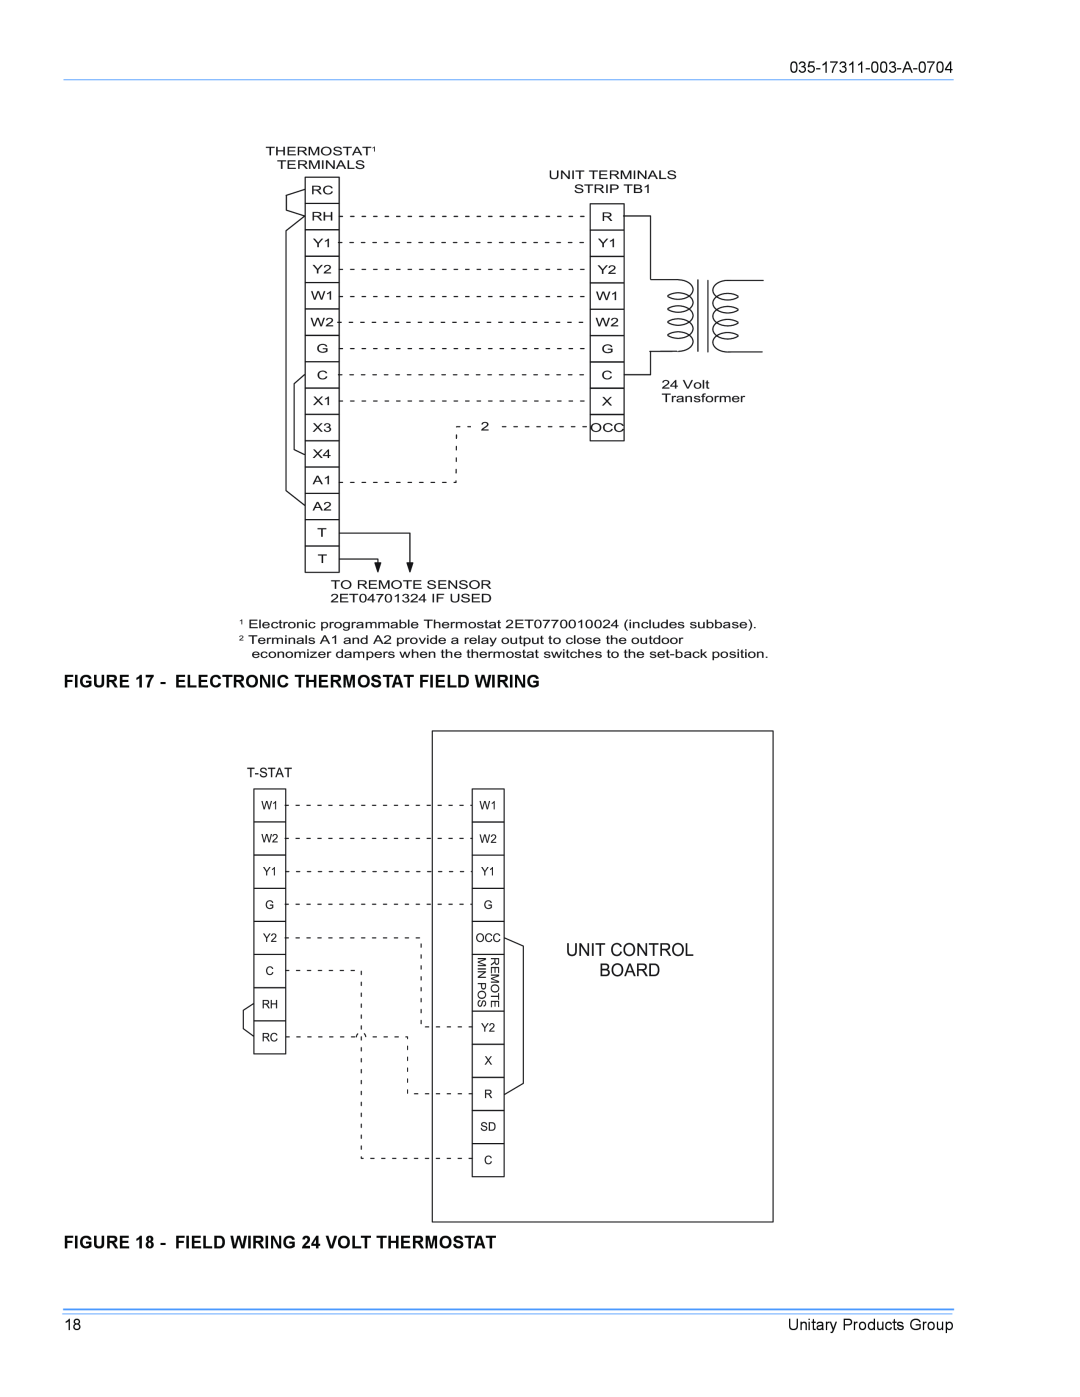 York DM090 installation manual Electronic Thermostat Field Wiring, Unitcontrol Board, FIELD WIRING 24 VOLT THERMOSTAT 